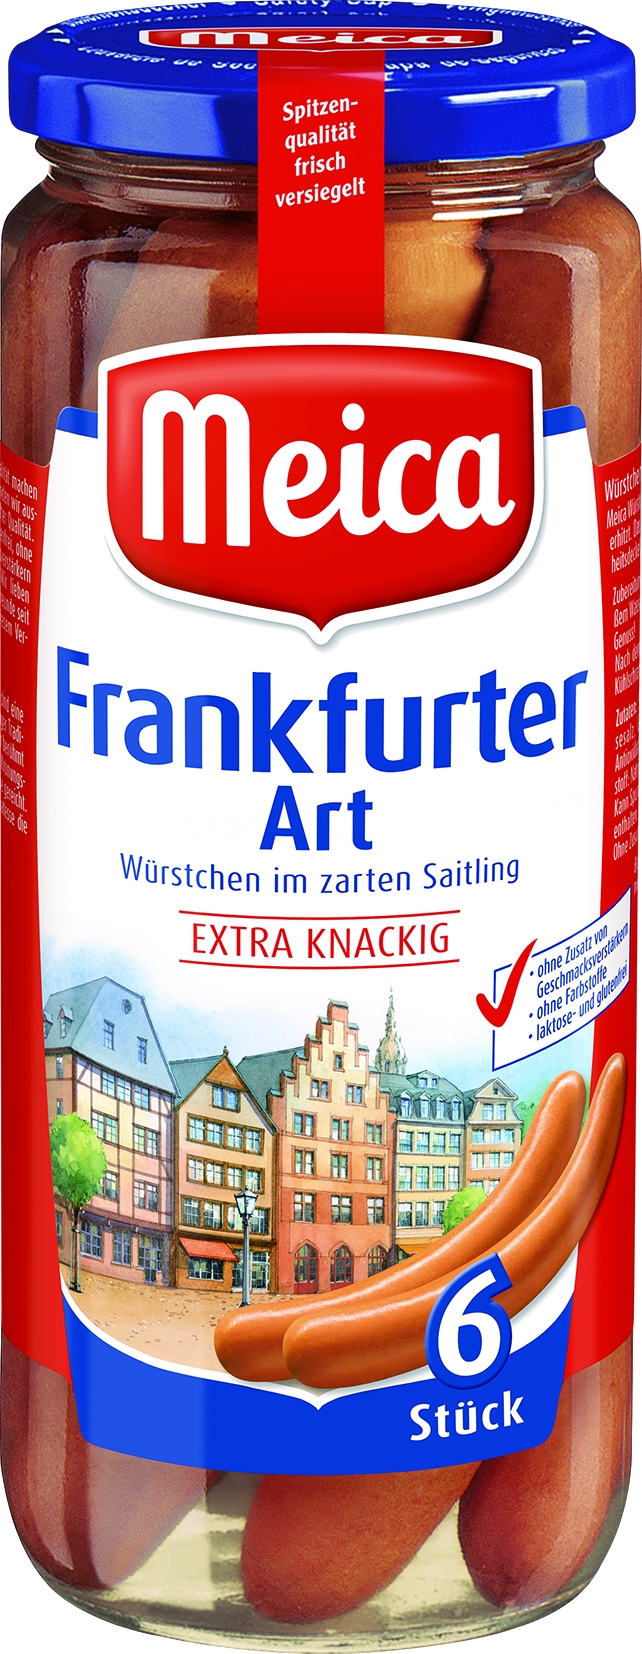 Frankfurter 6 St = 250 gr